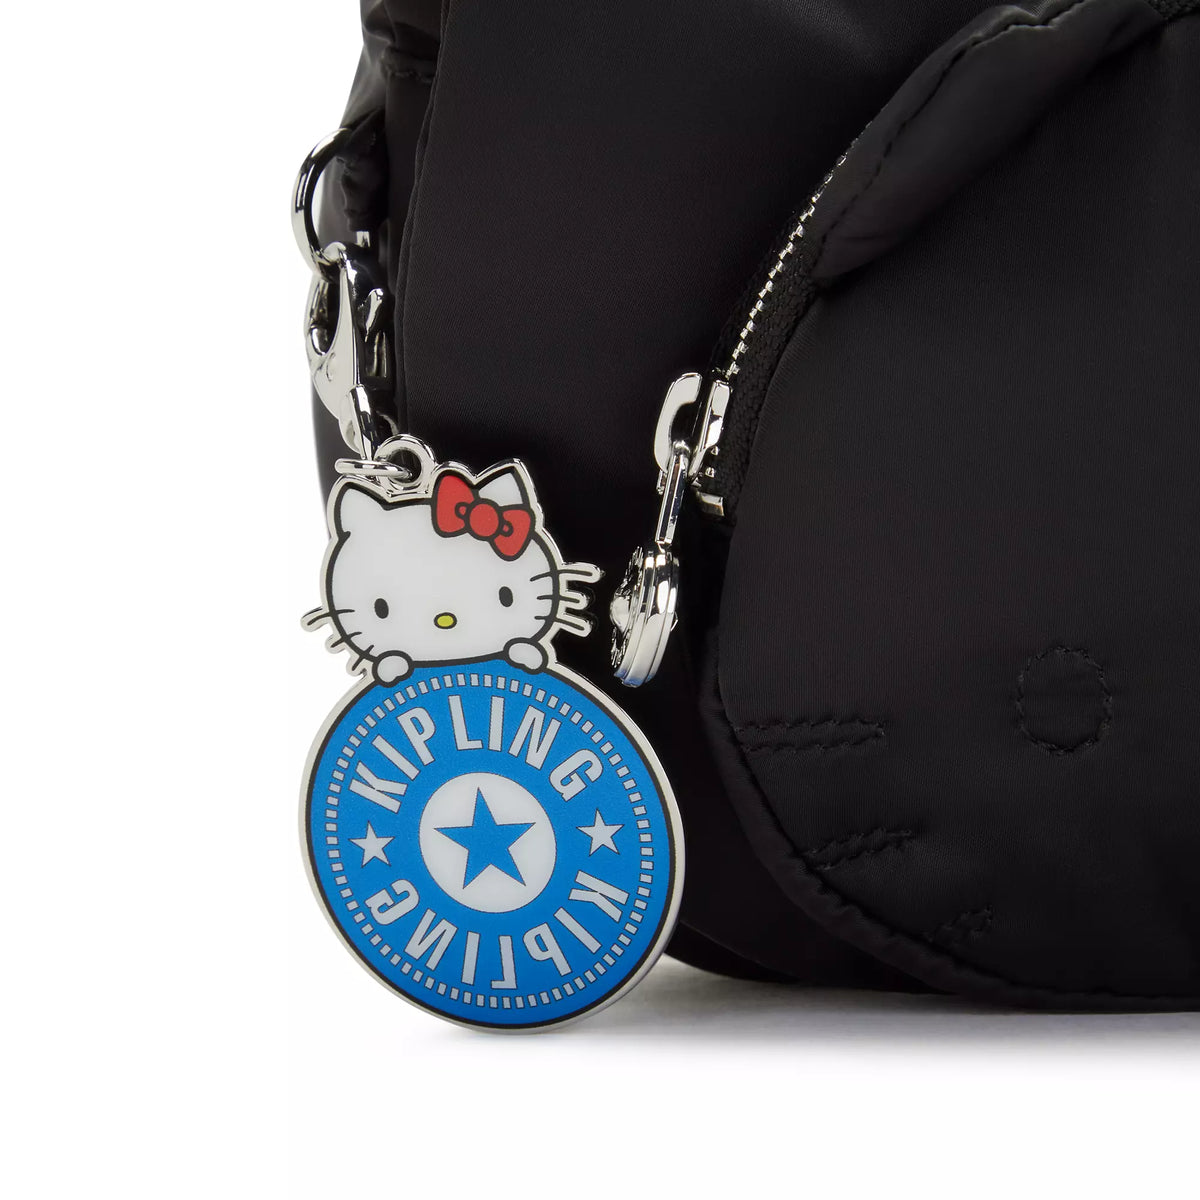 Hello Kitty x Kipling Nylon Puff Ryanne Shoulder Bag